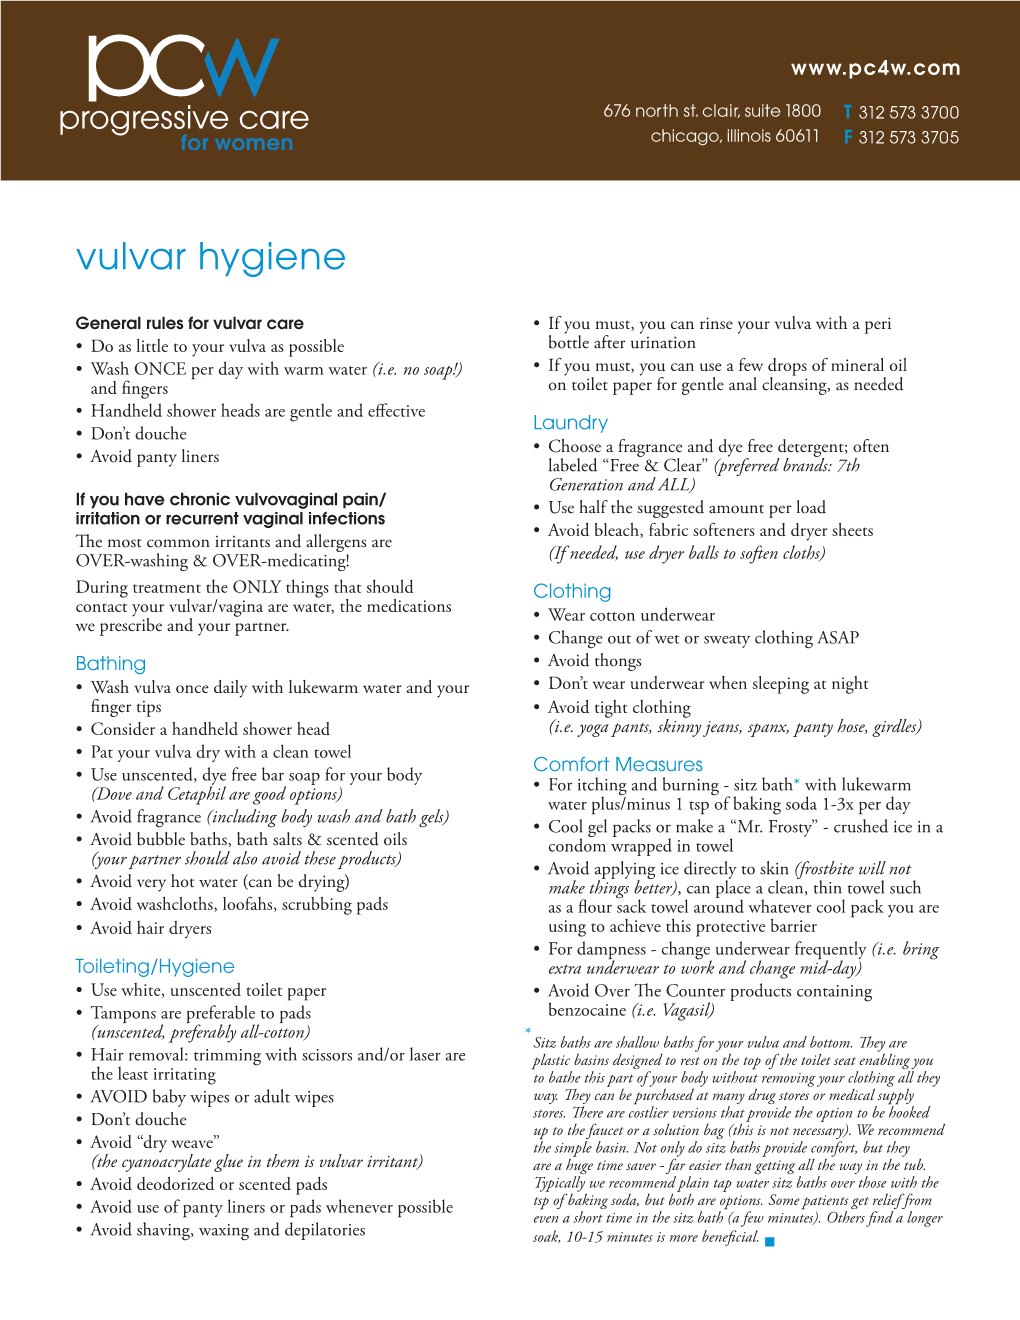 Vulvar Hygiene